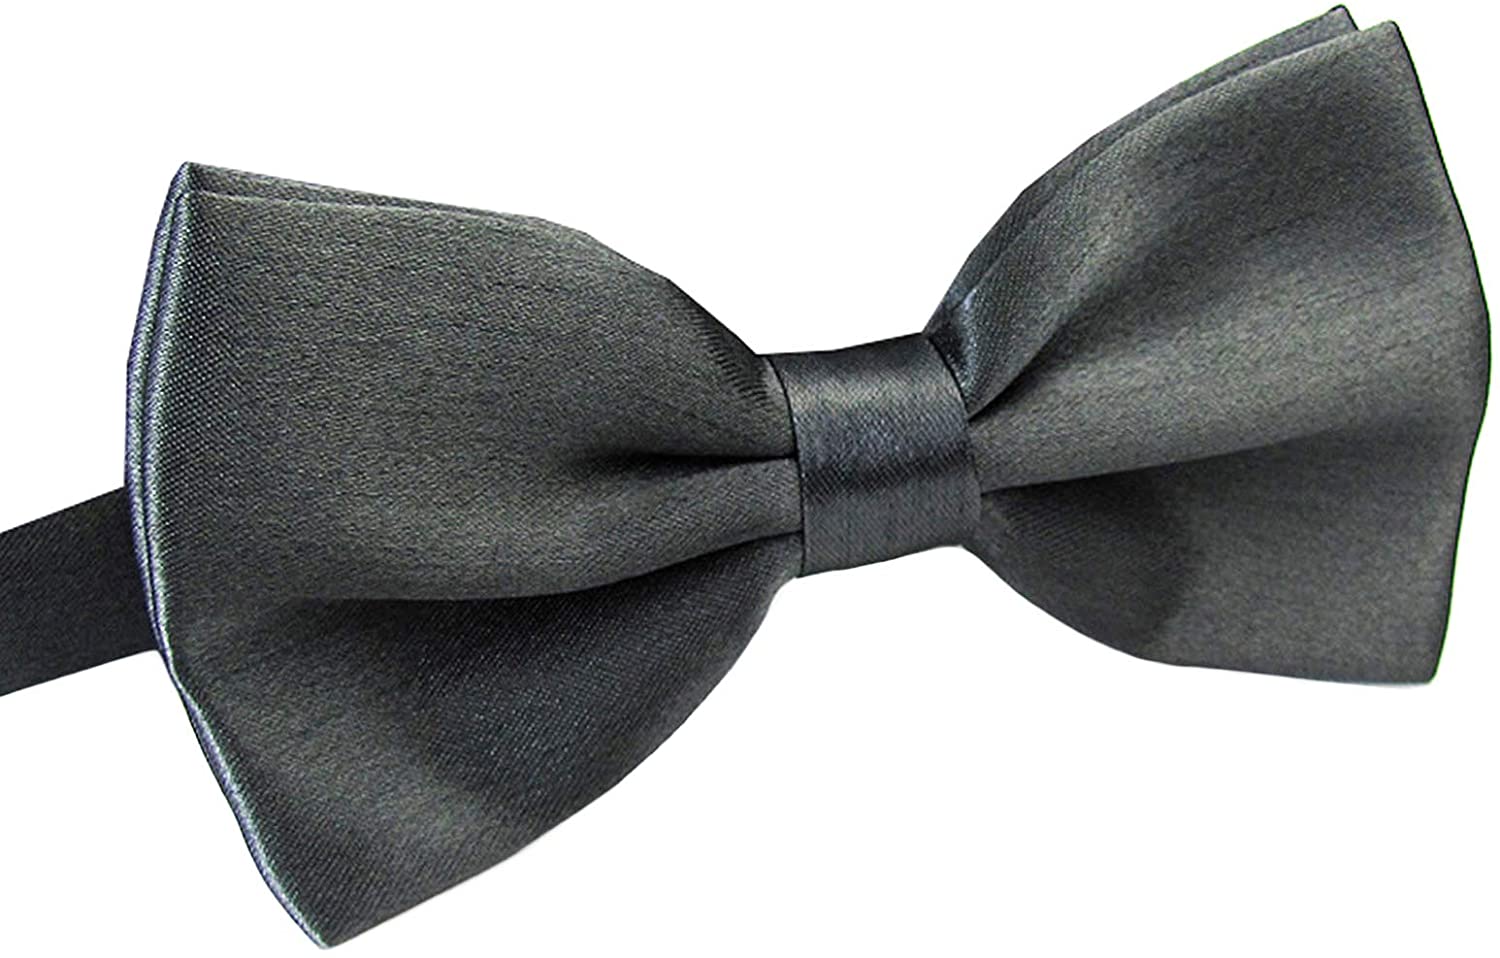 Mens Pre Tied Bow Ties for Wedding Party Fancy Plain Adjustable Bowties Necktie